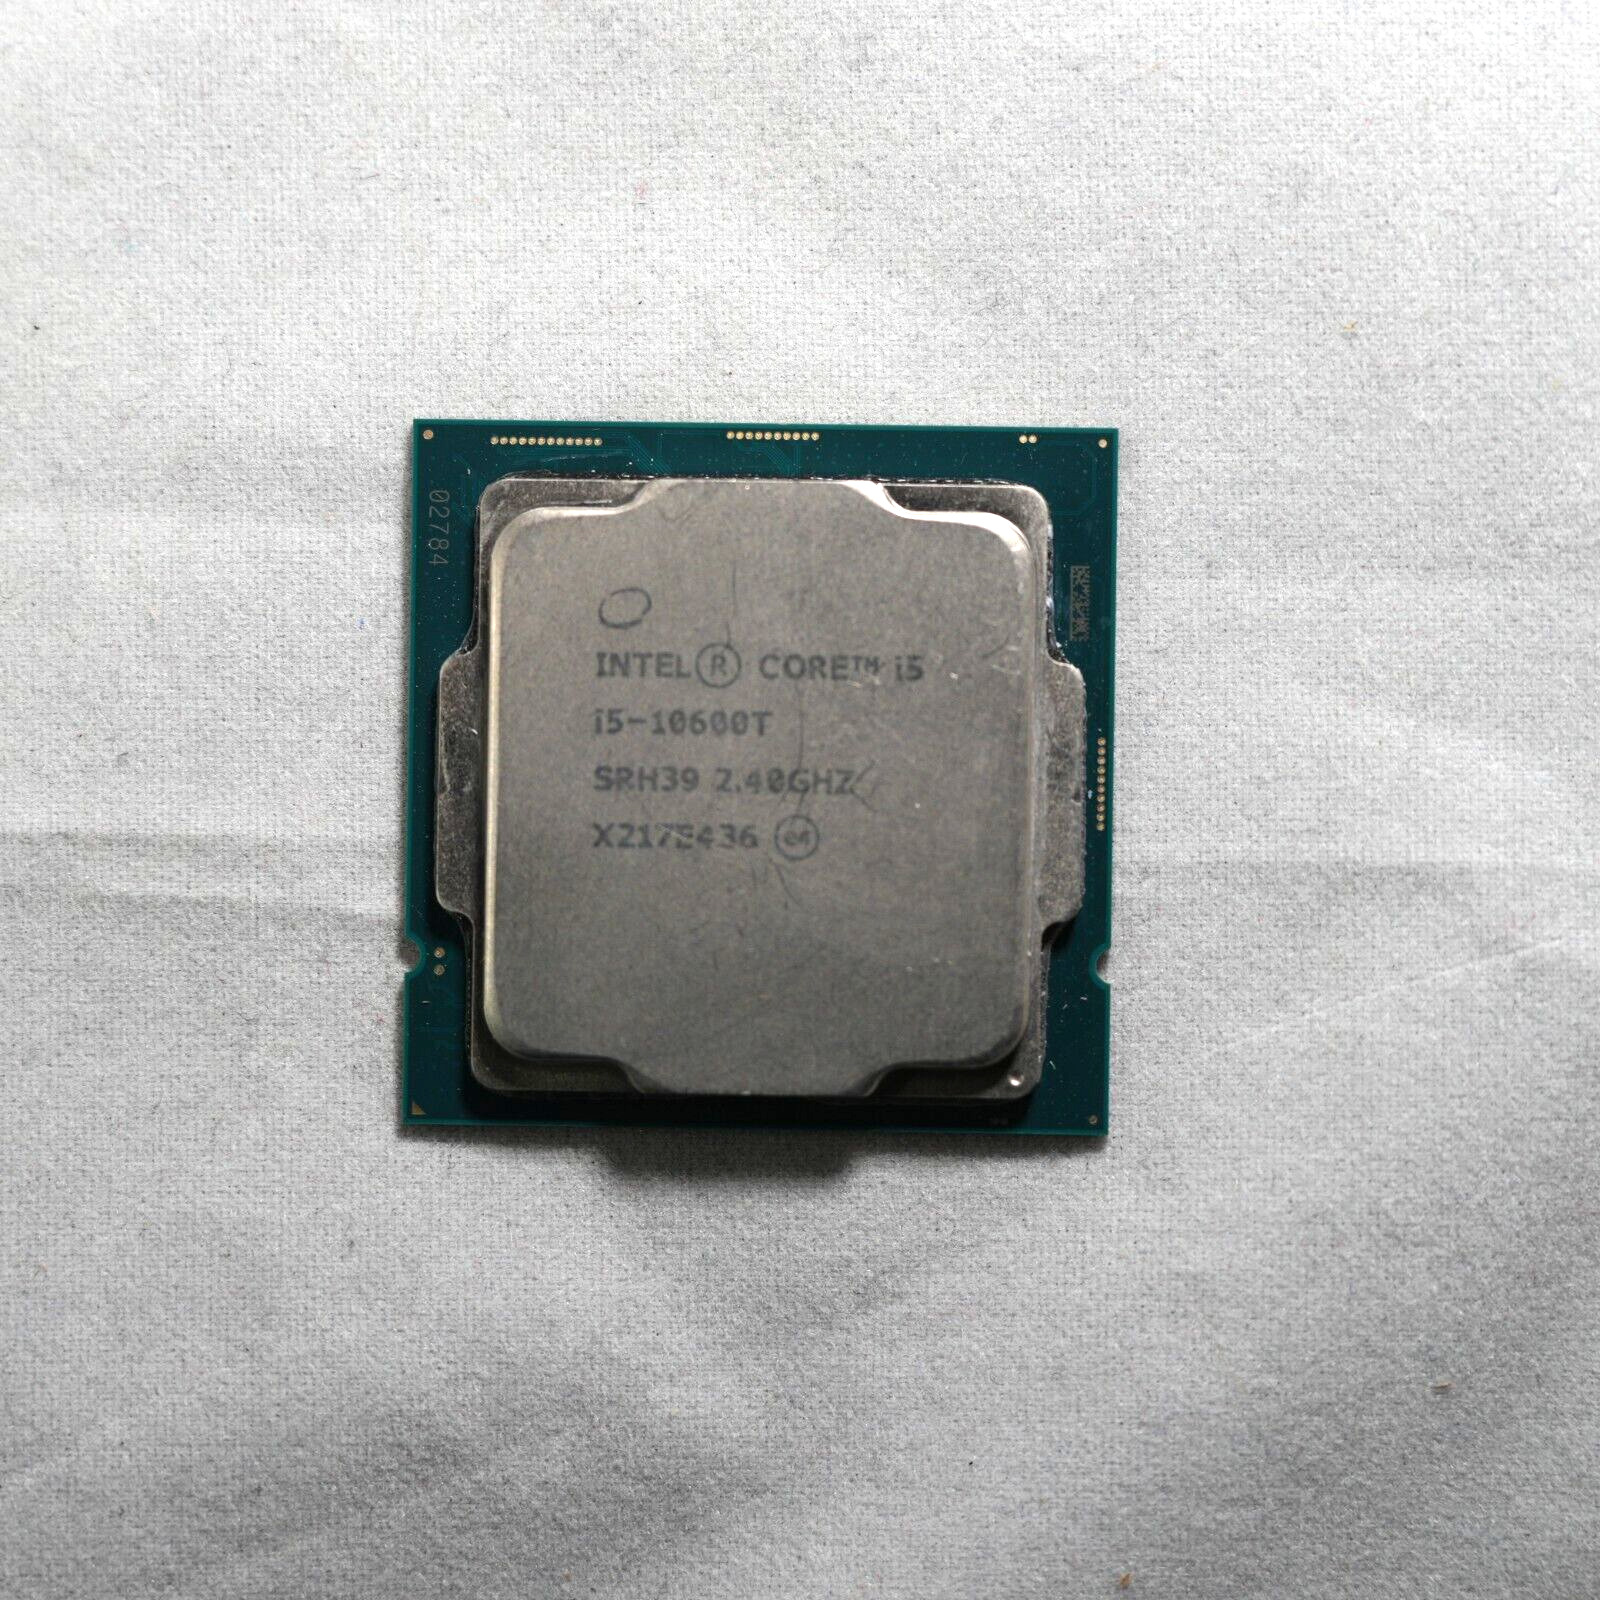 Intel Core i5-10600T 2.4 GHz Desktop Processor SRH39